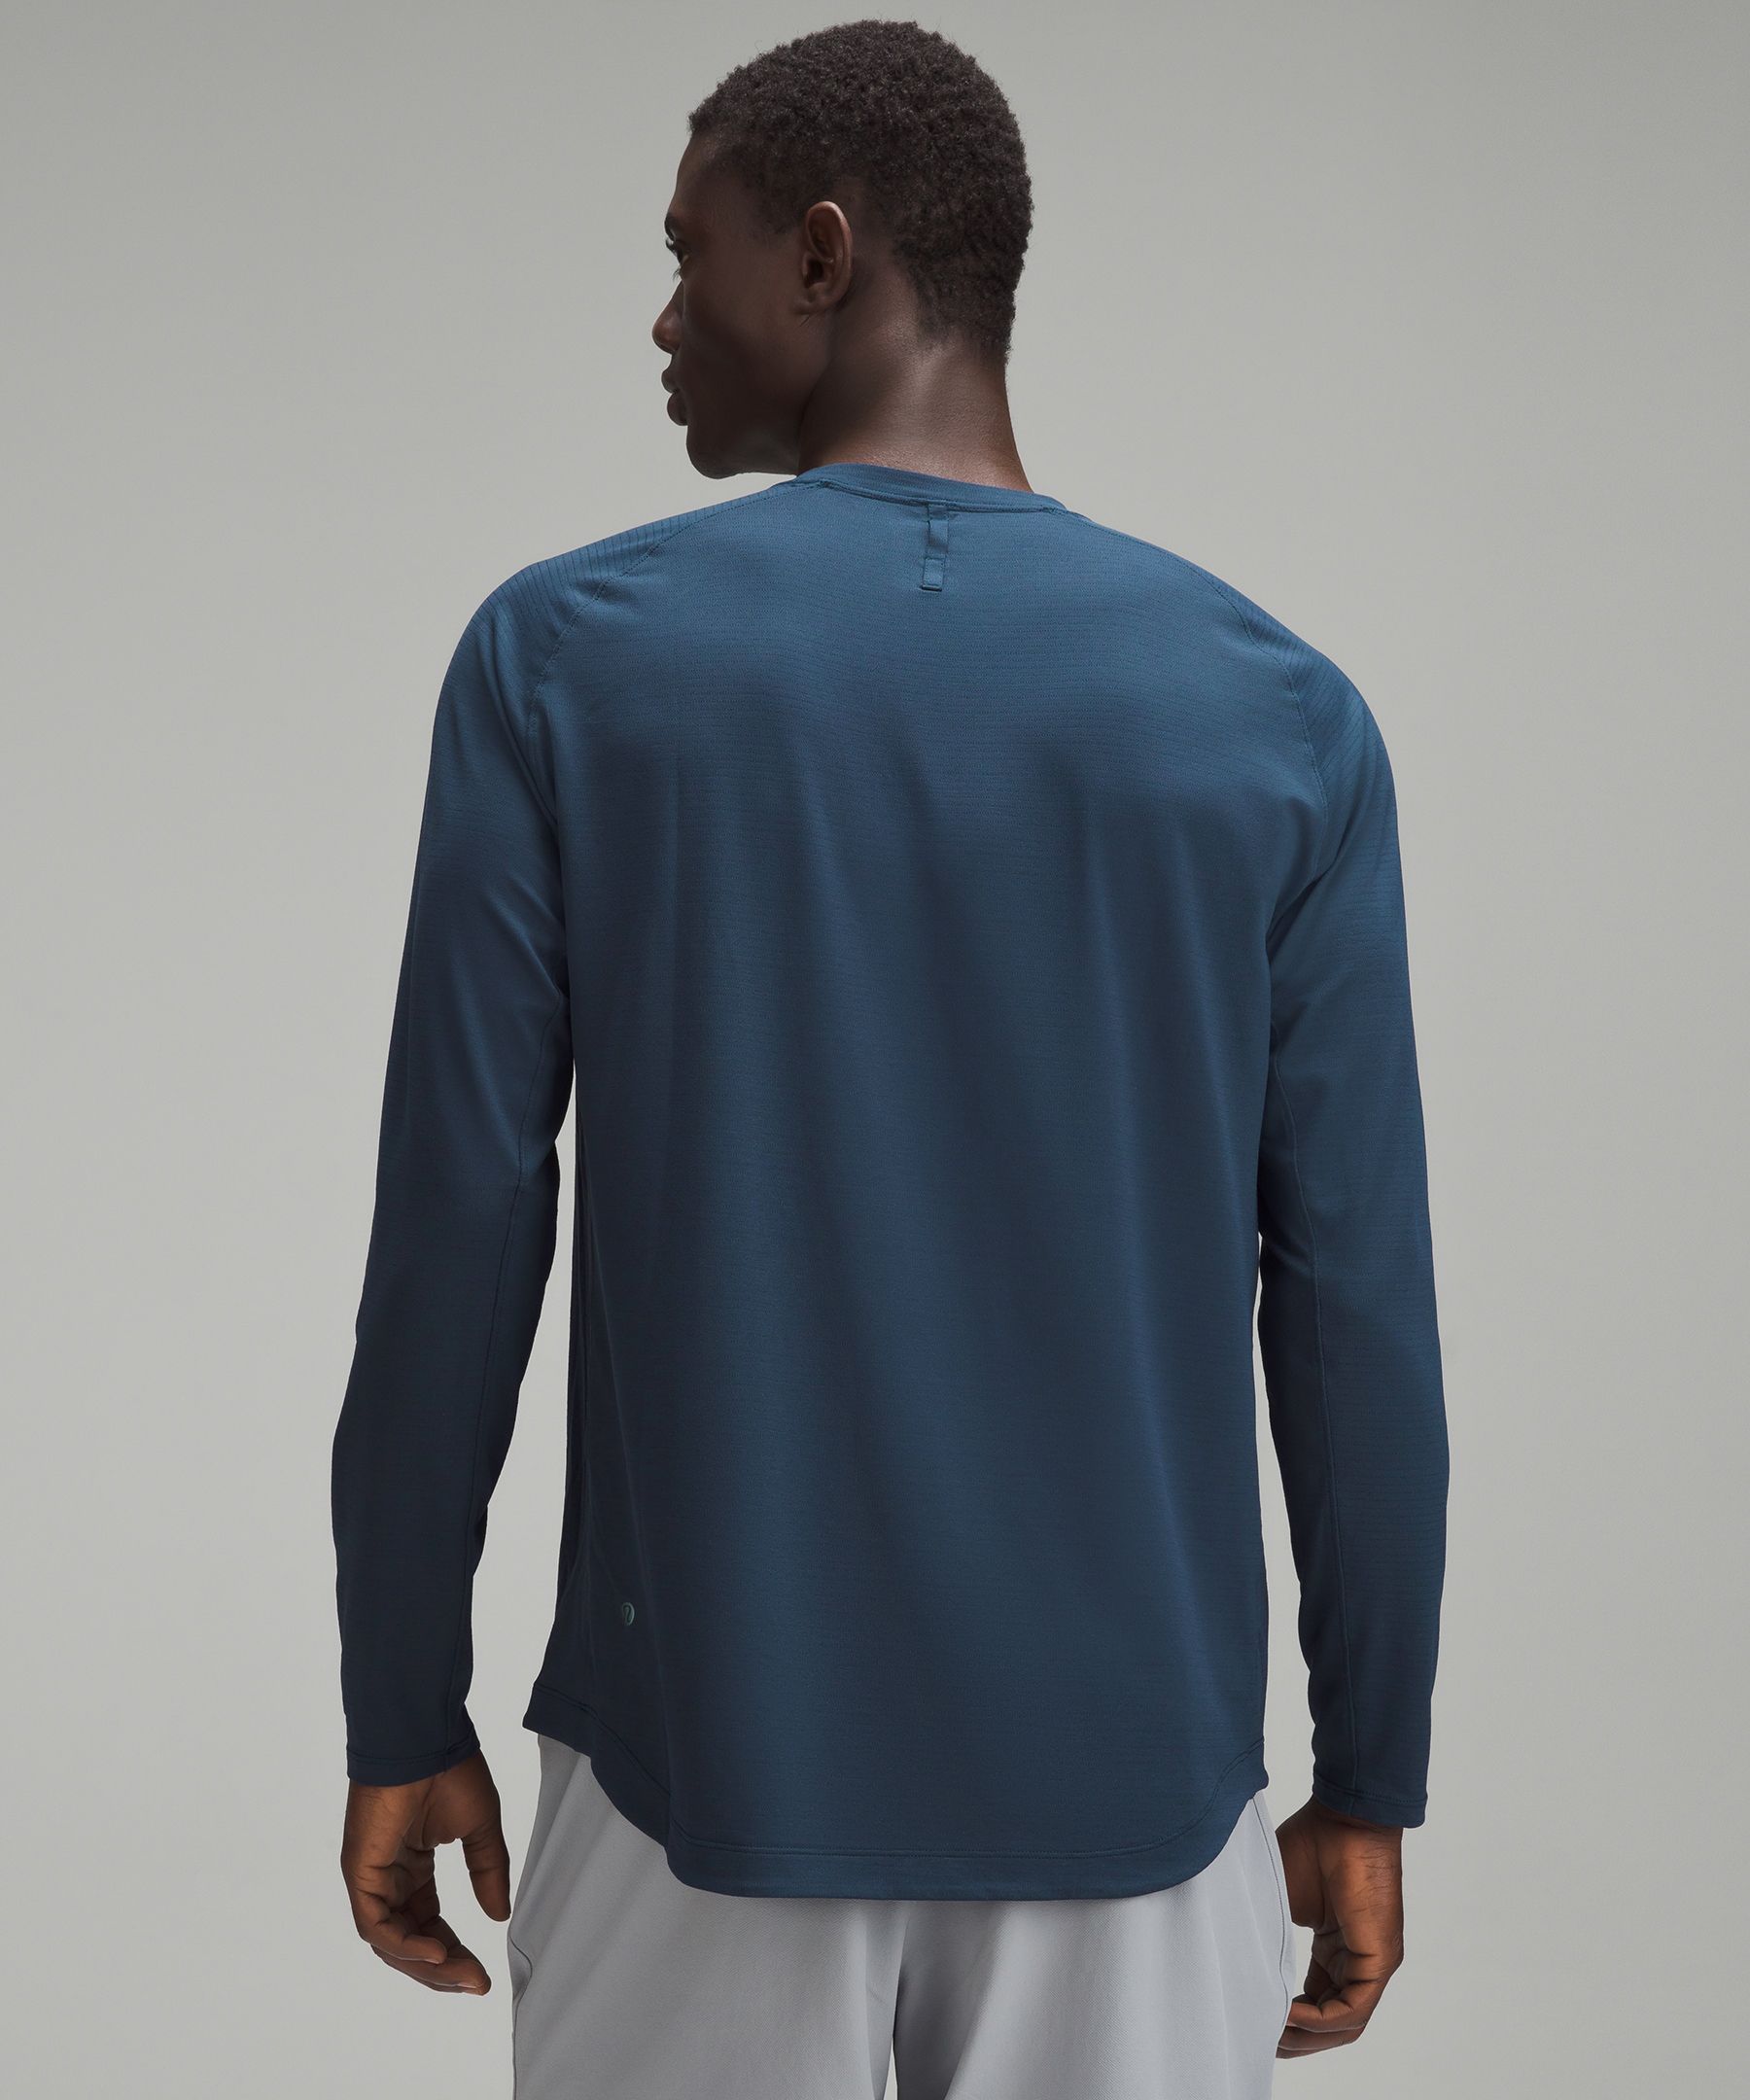 Lululemon Athletica Blue Active T-Shirt Size 8 - 43% off